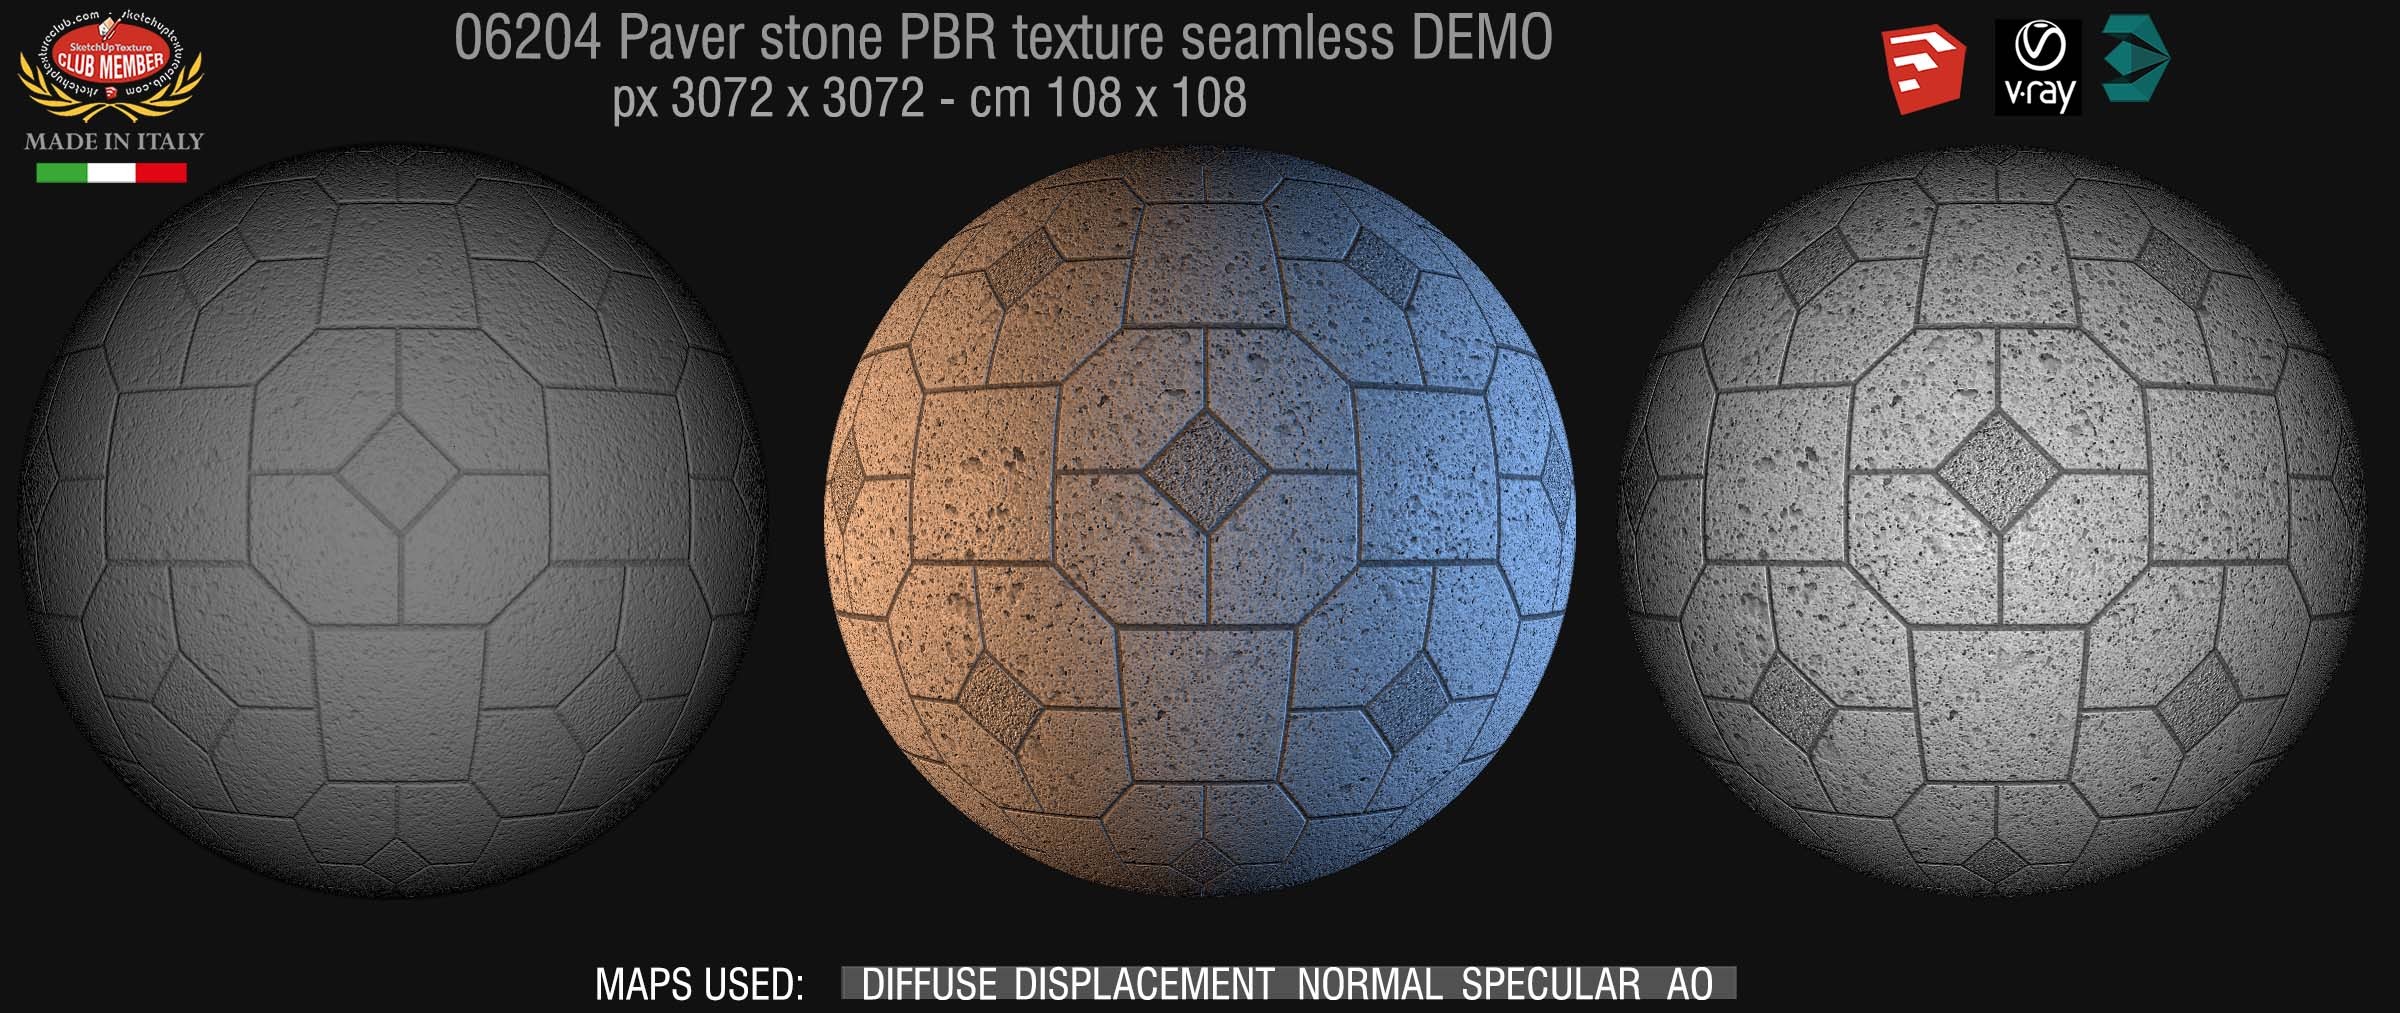 06204 Pavers stone PBR texture seamless DEMO